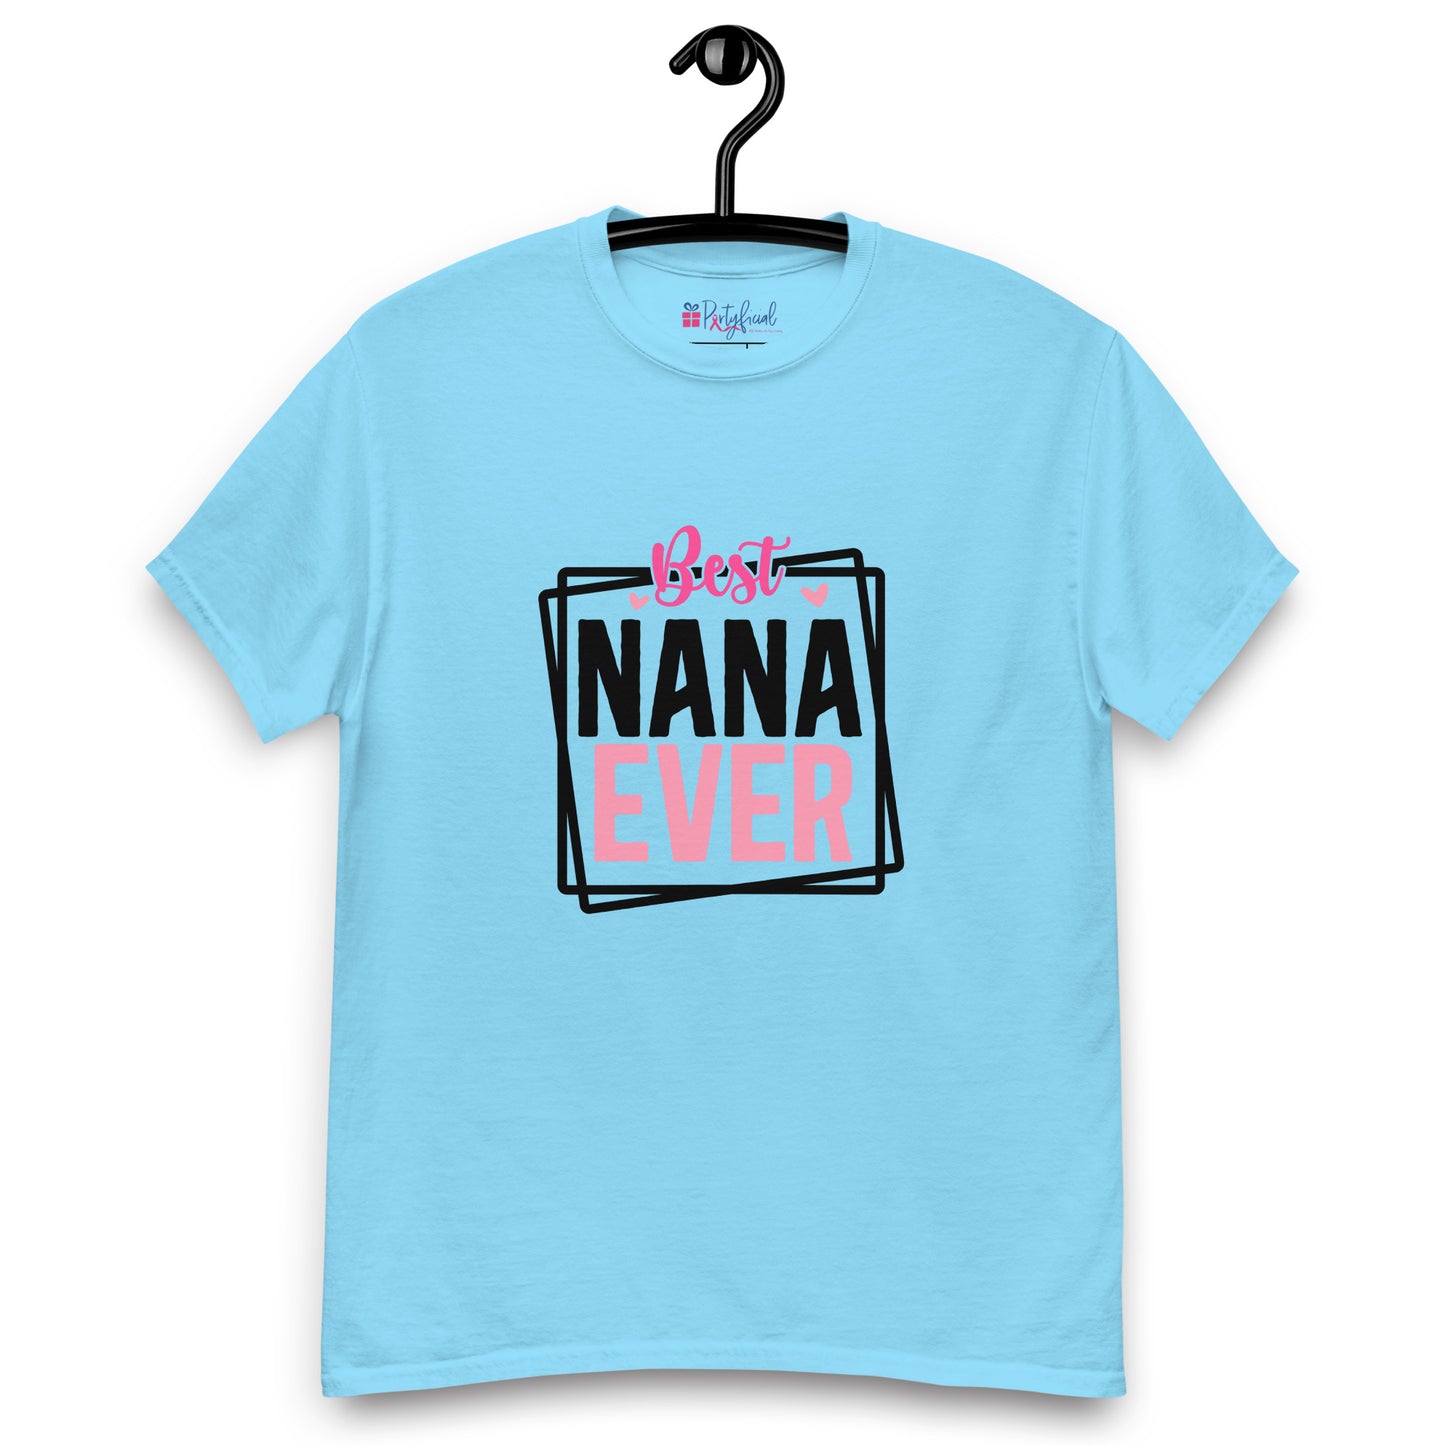 Best Nana Ever tee